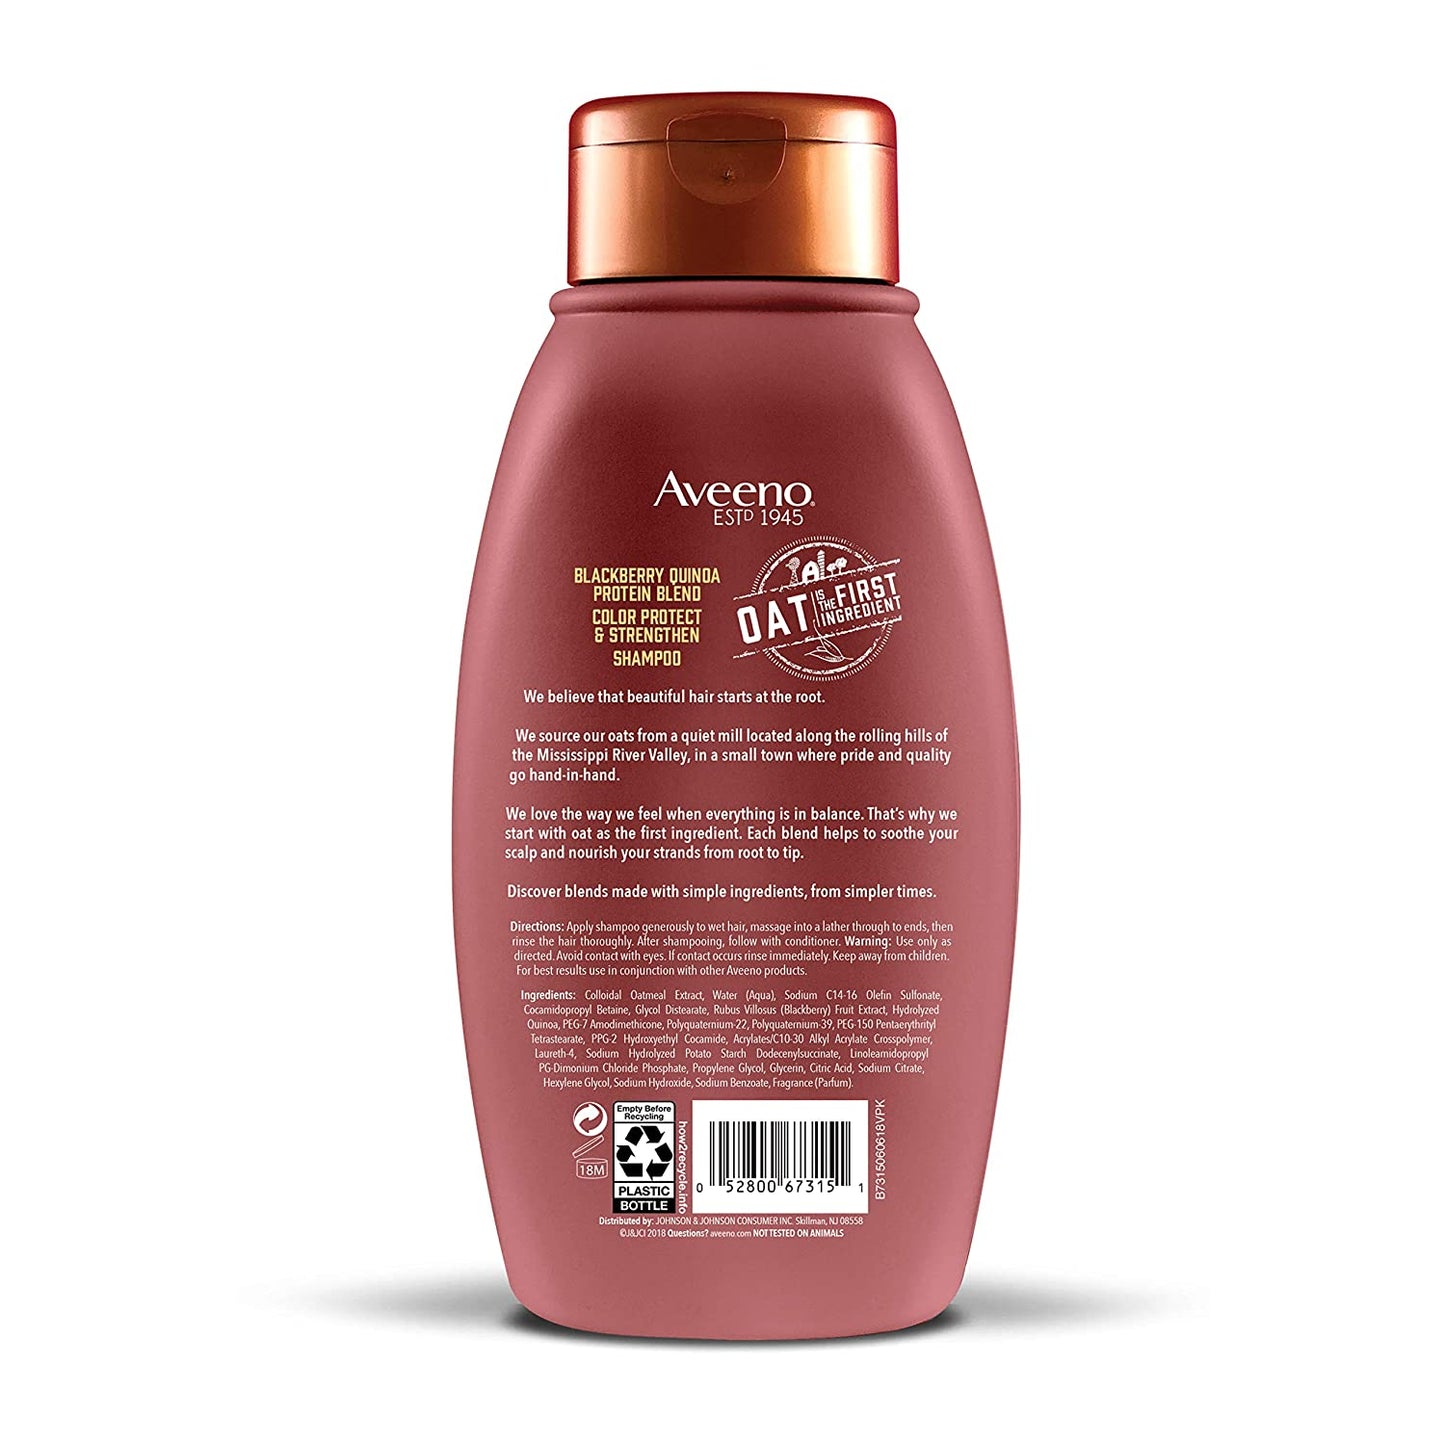 Aveeno Blackberry Quinoa Protein Blend Sulfate-Free Shampoo, 12 fl.oz / 354ml